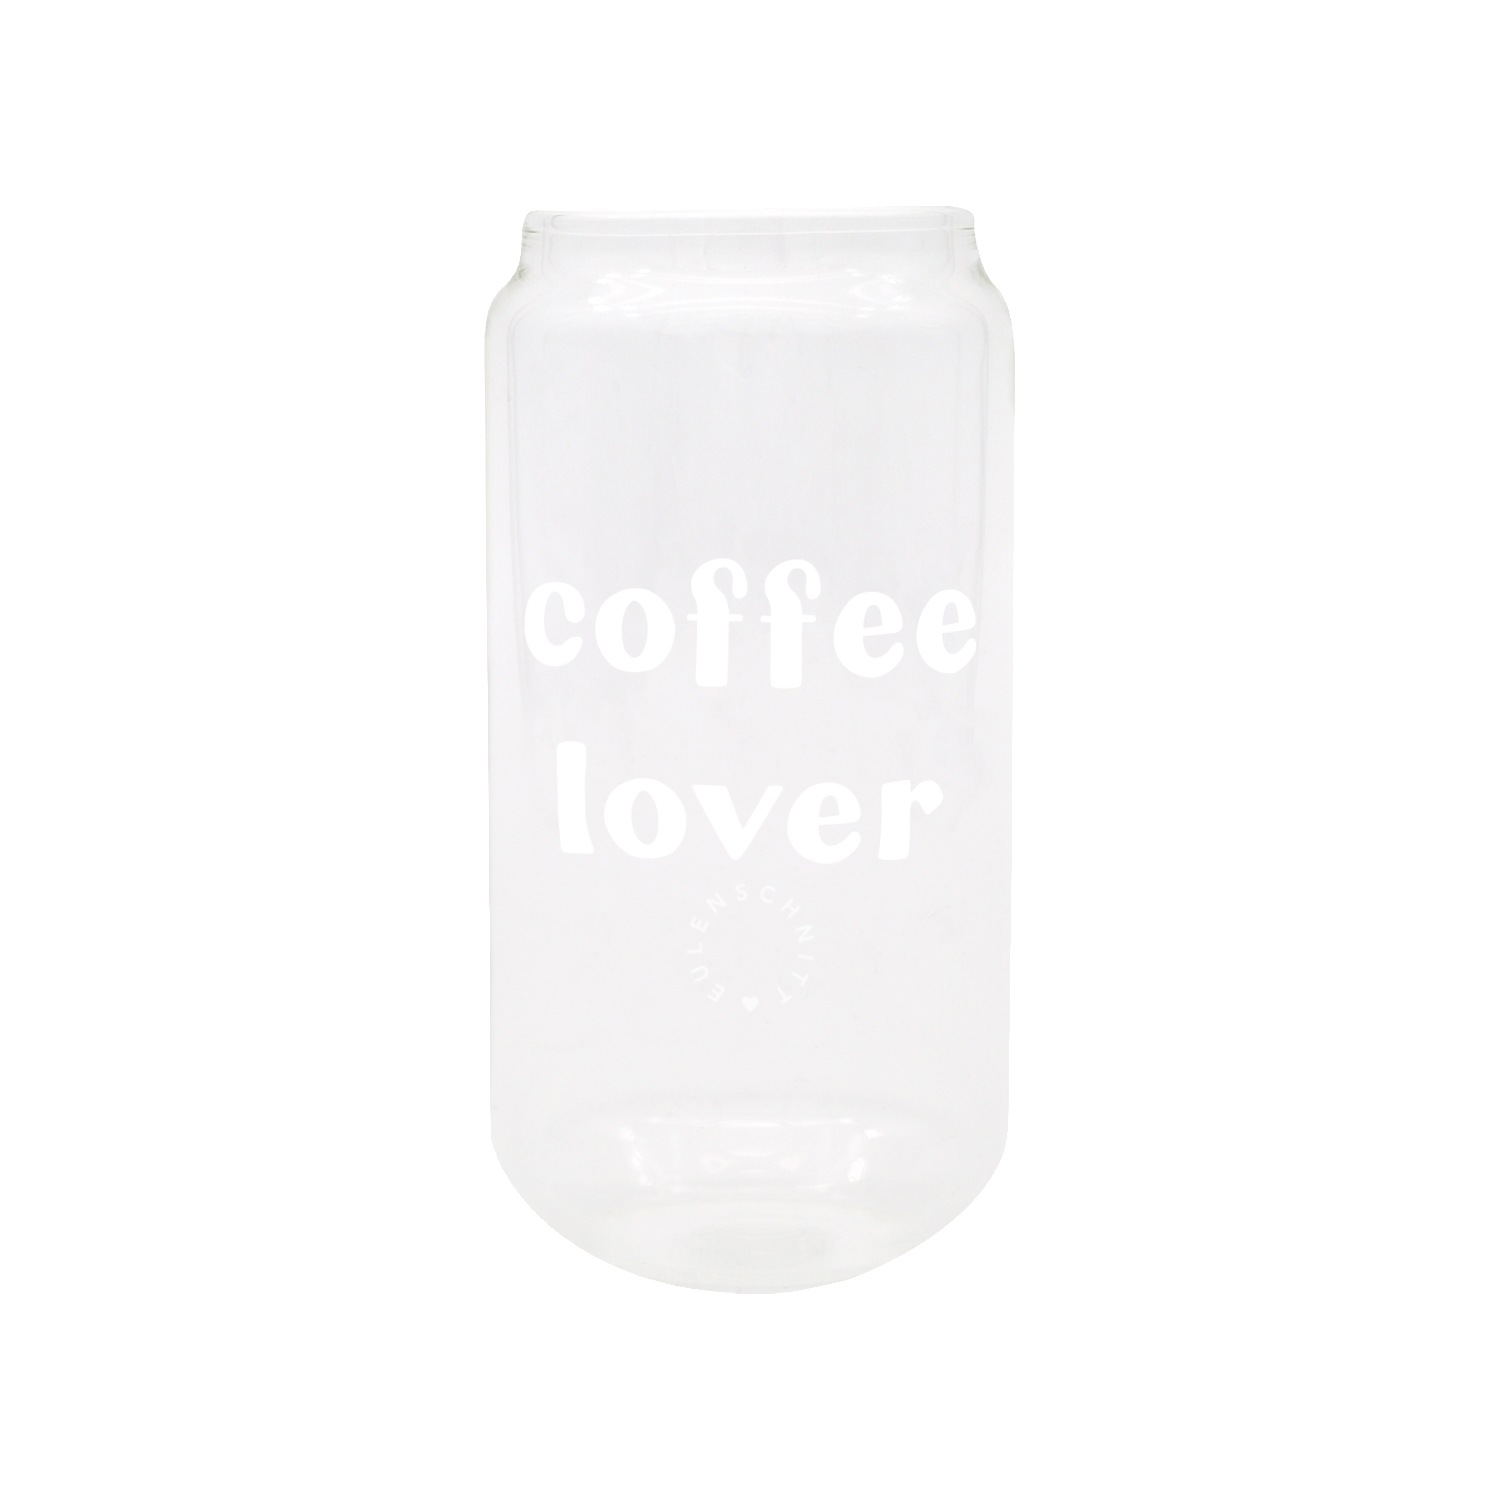 Hohes Trinkglas Coffee Lover, Eulenschnitt